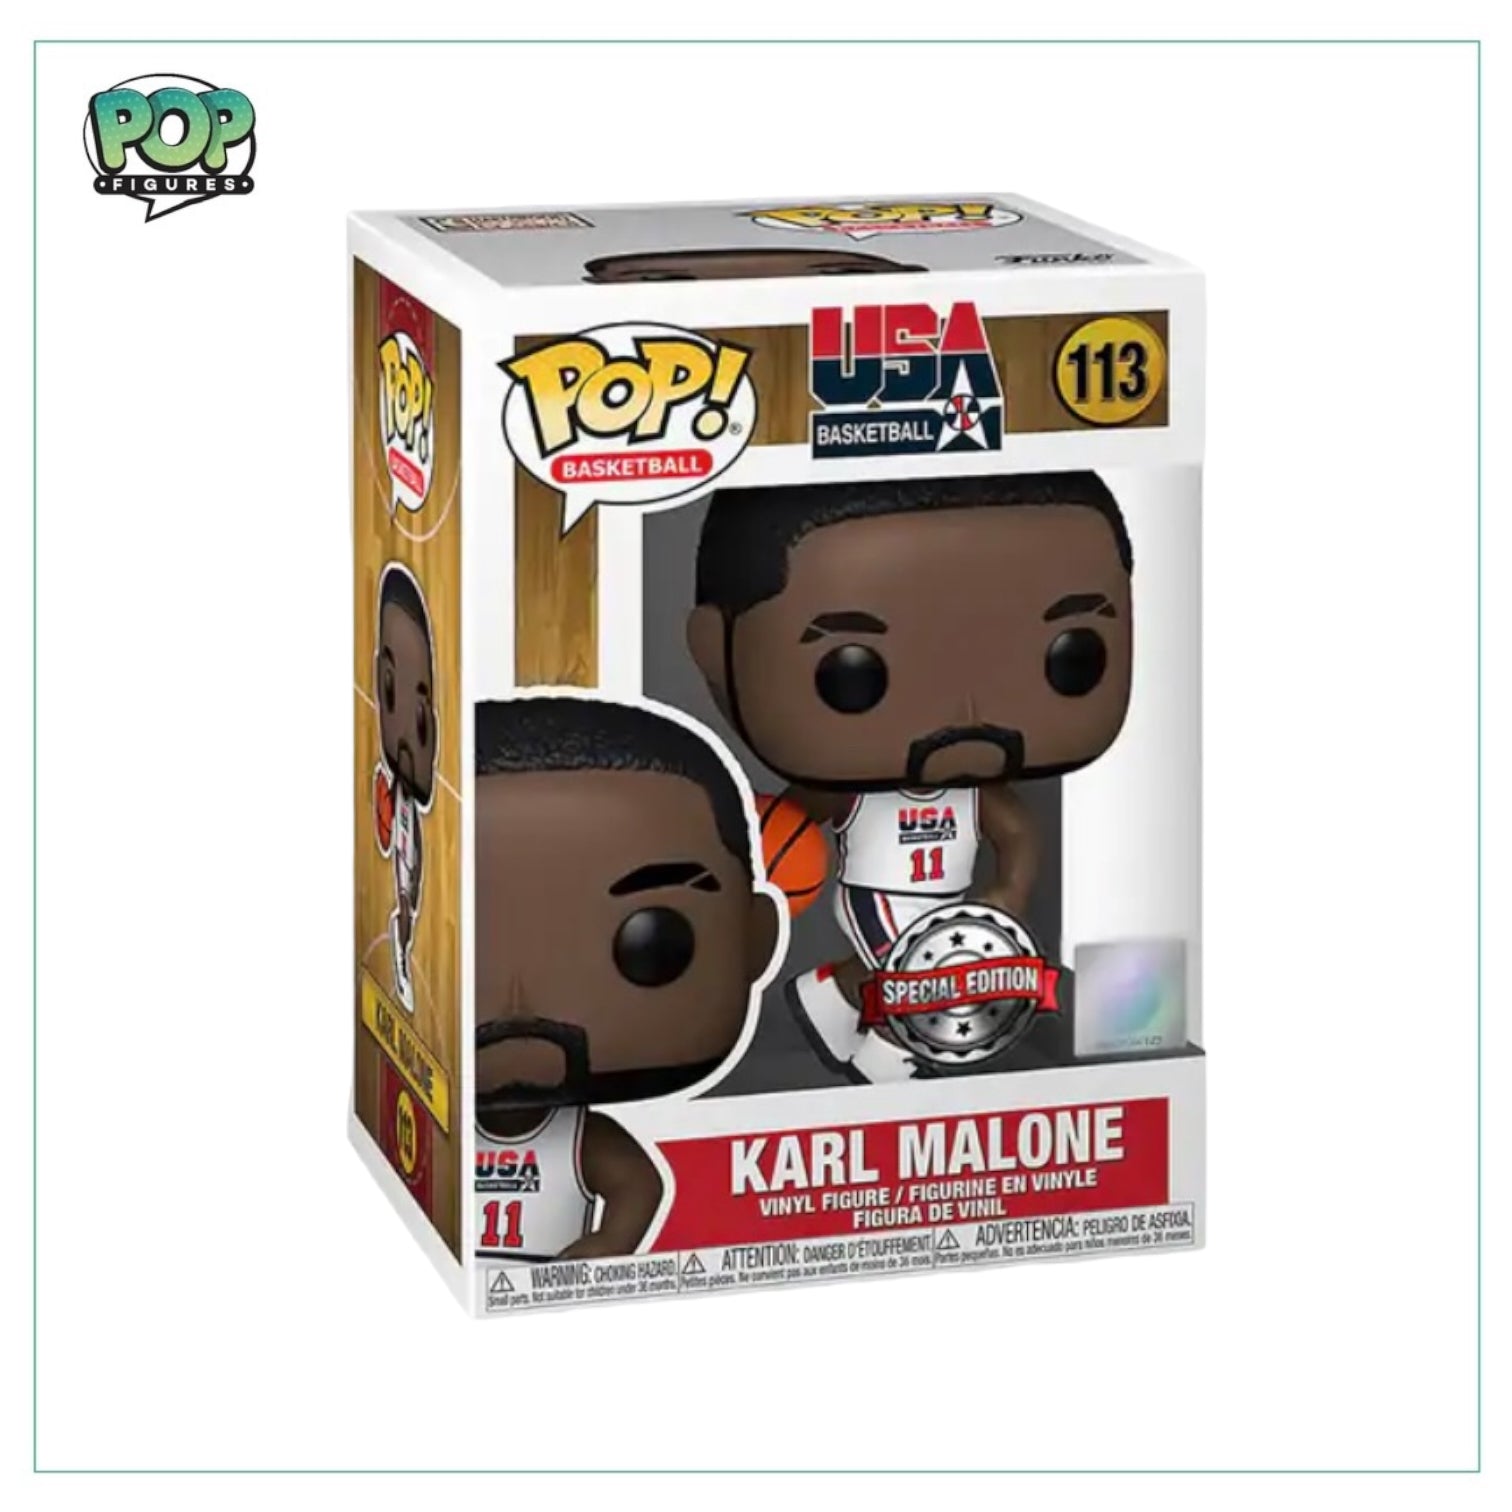 Karl Malone #113 Funko Pop! - USA Basketball - 2021 Pop - Special Edition